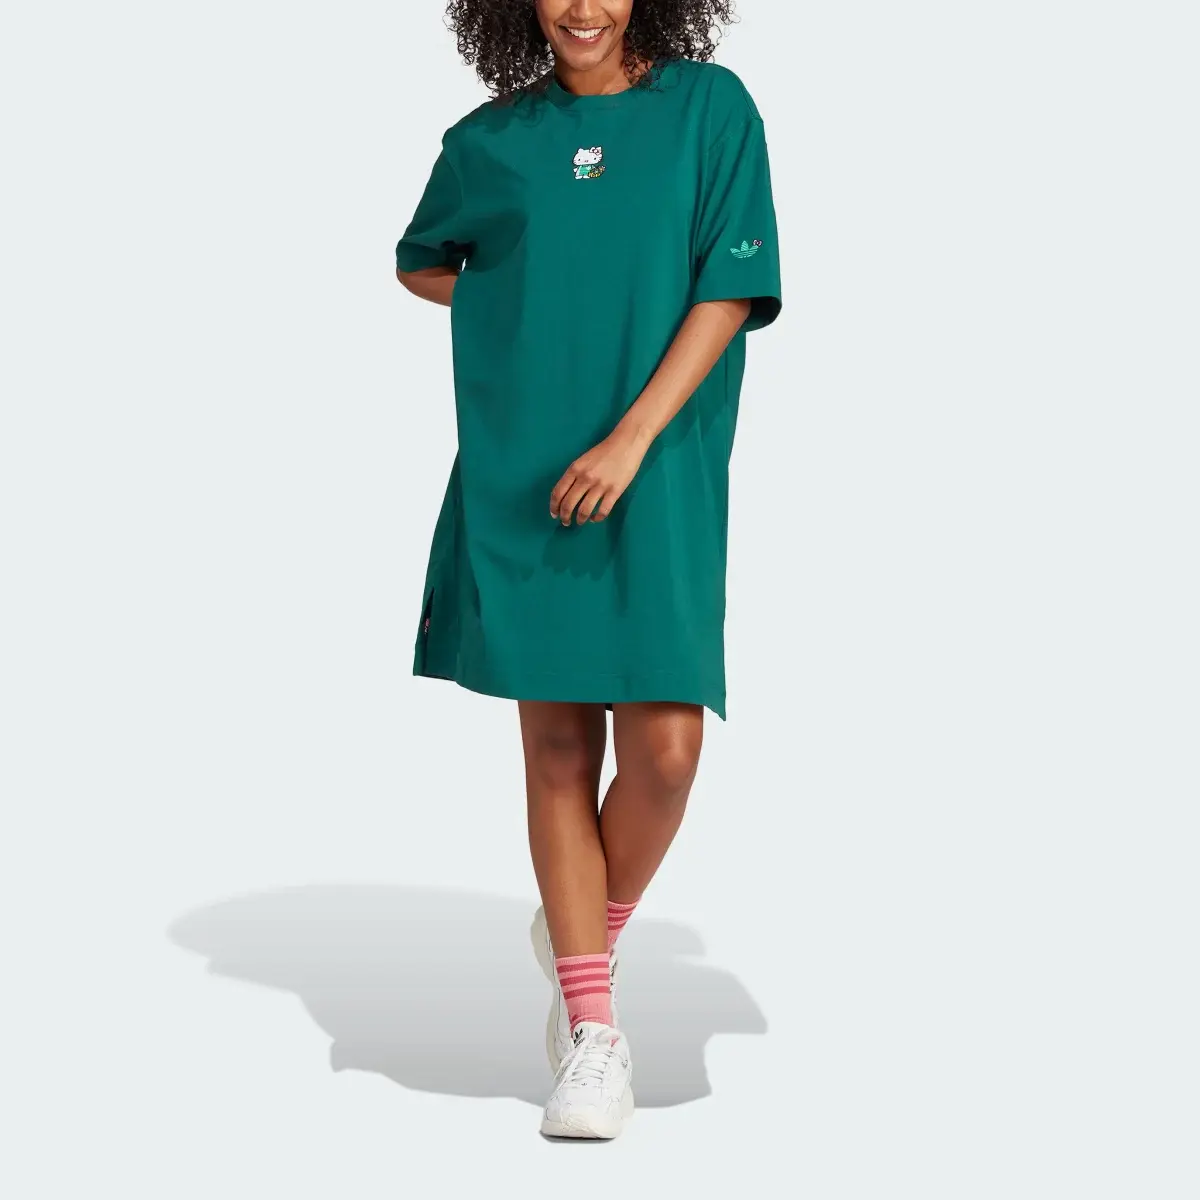 Adidas Originals x Hello Kitty Tee Dress. 1